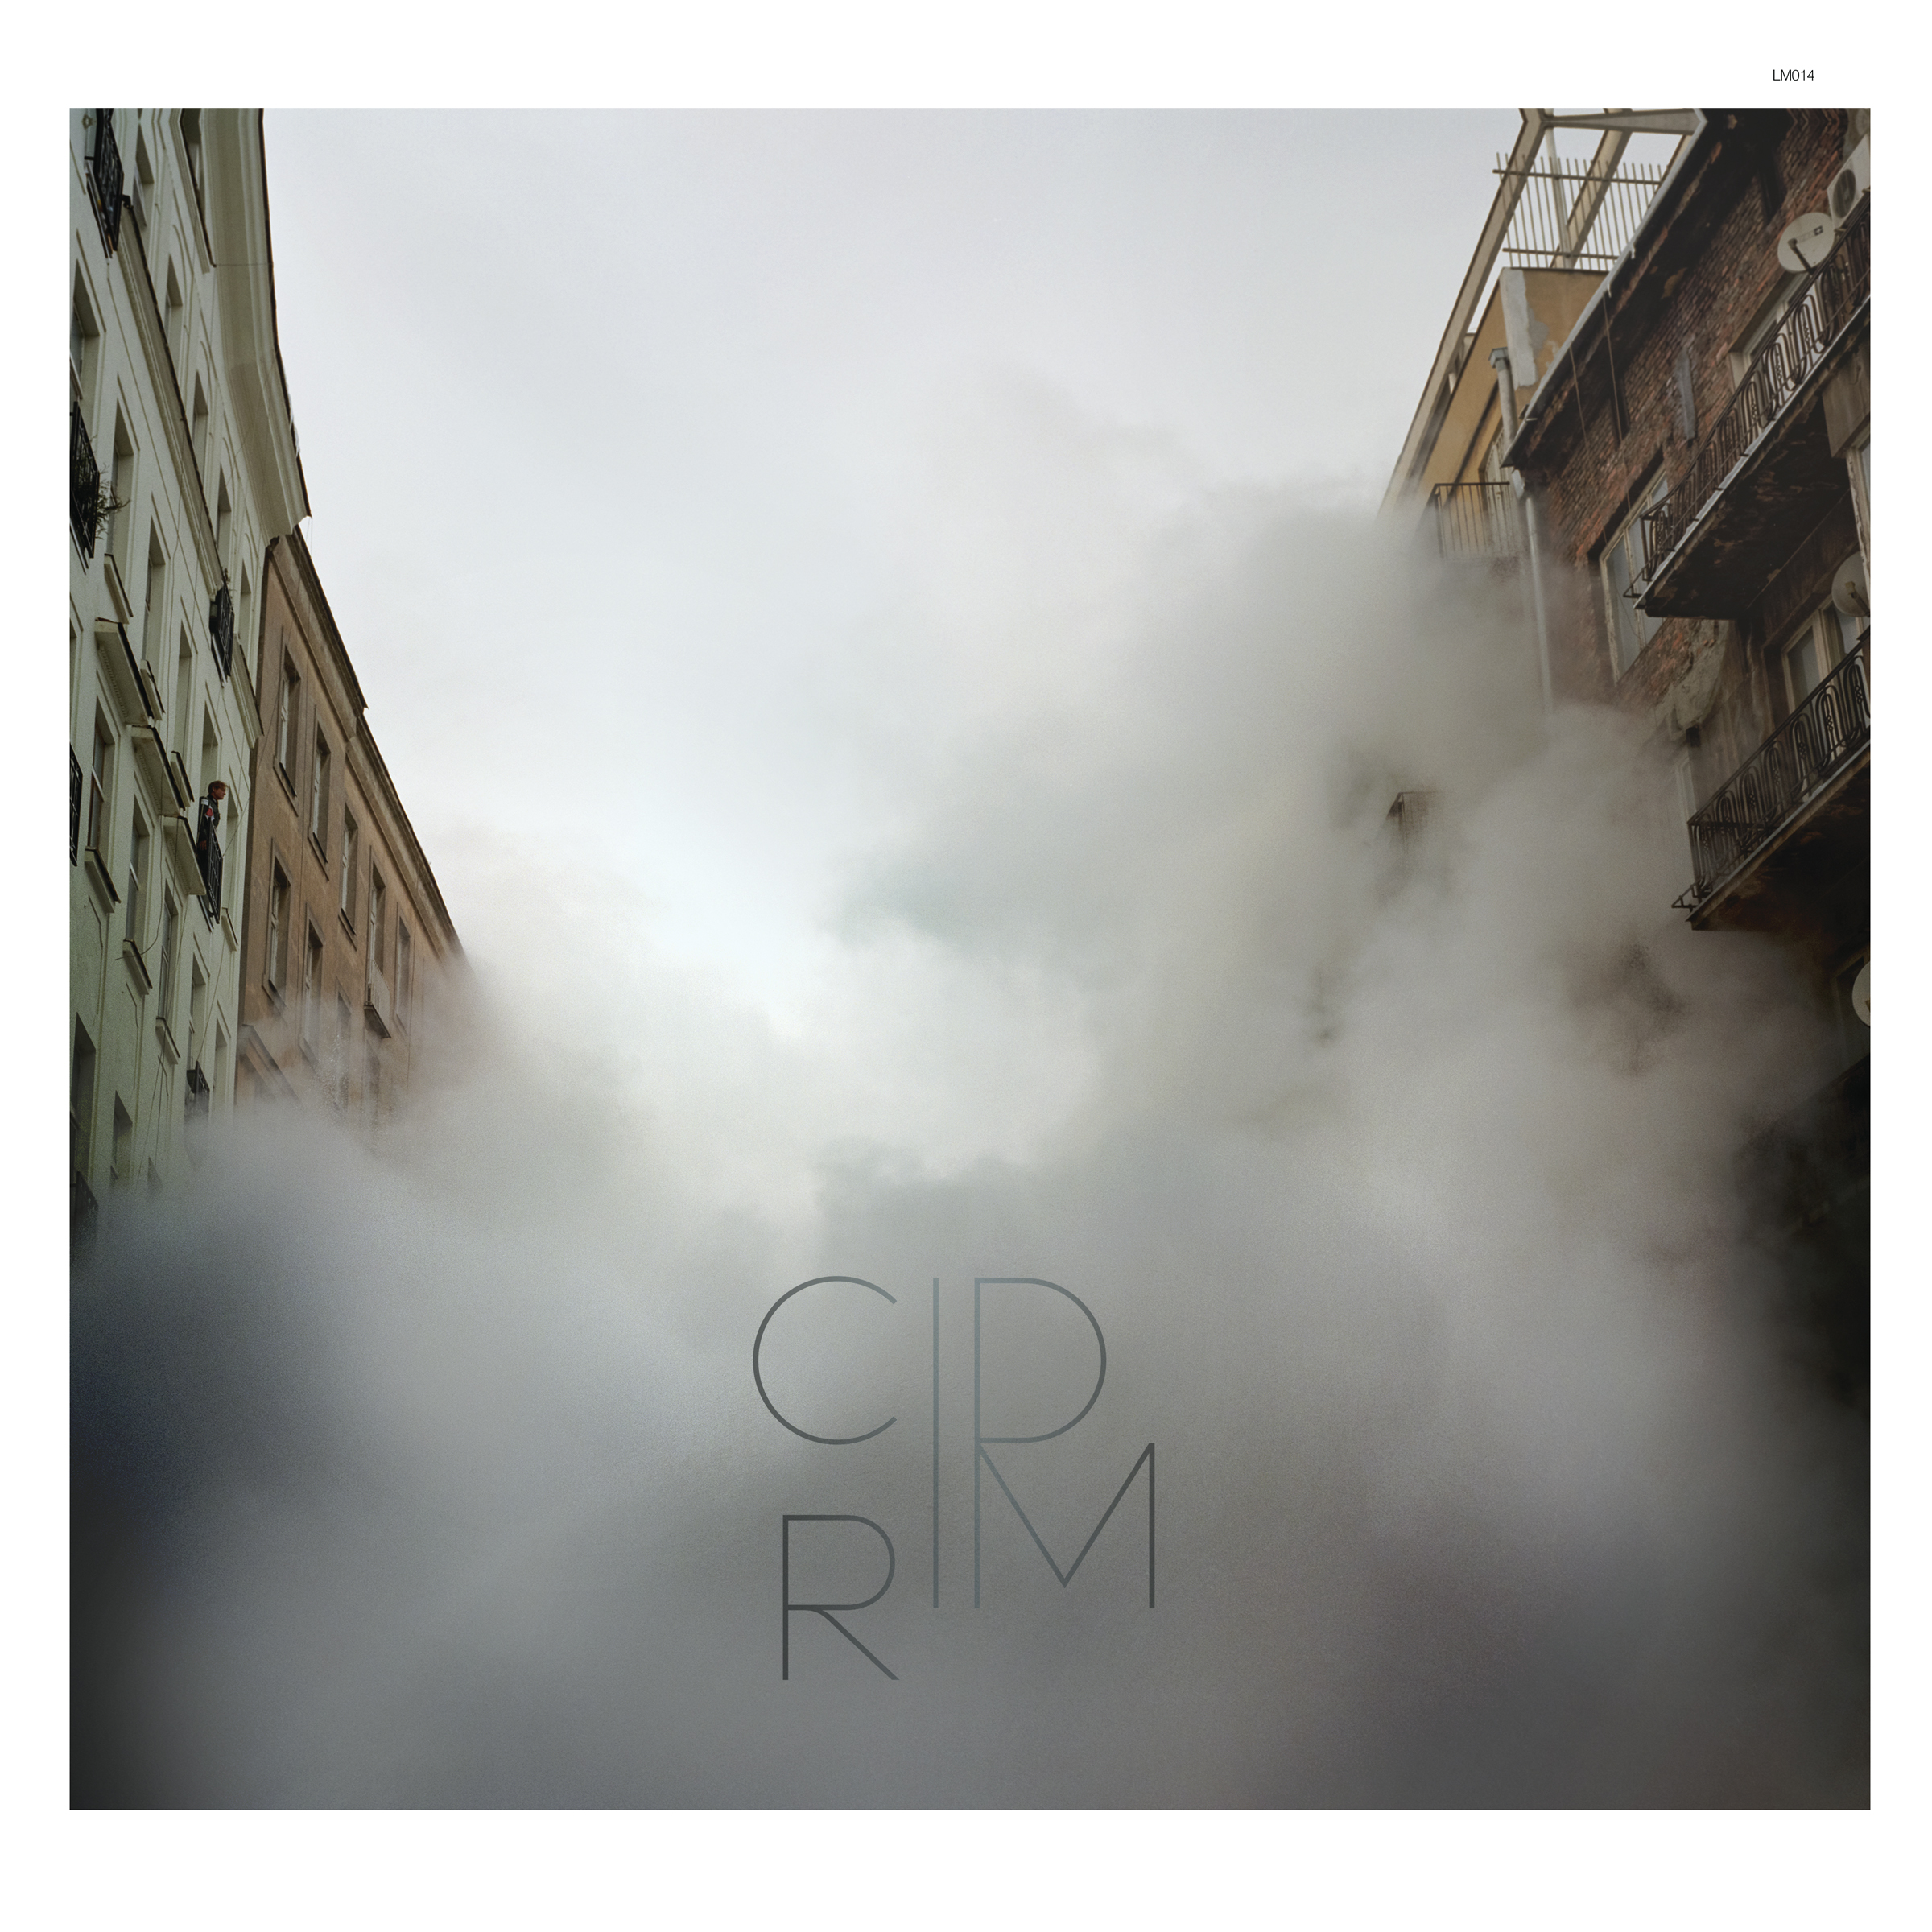 Cid Rim/MUTE CITY EP 12"